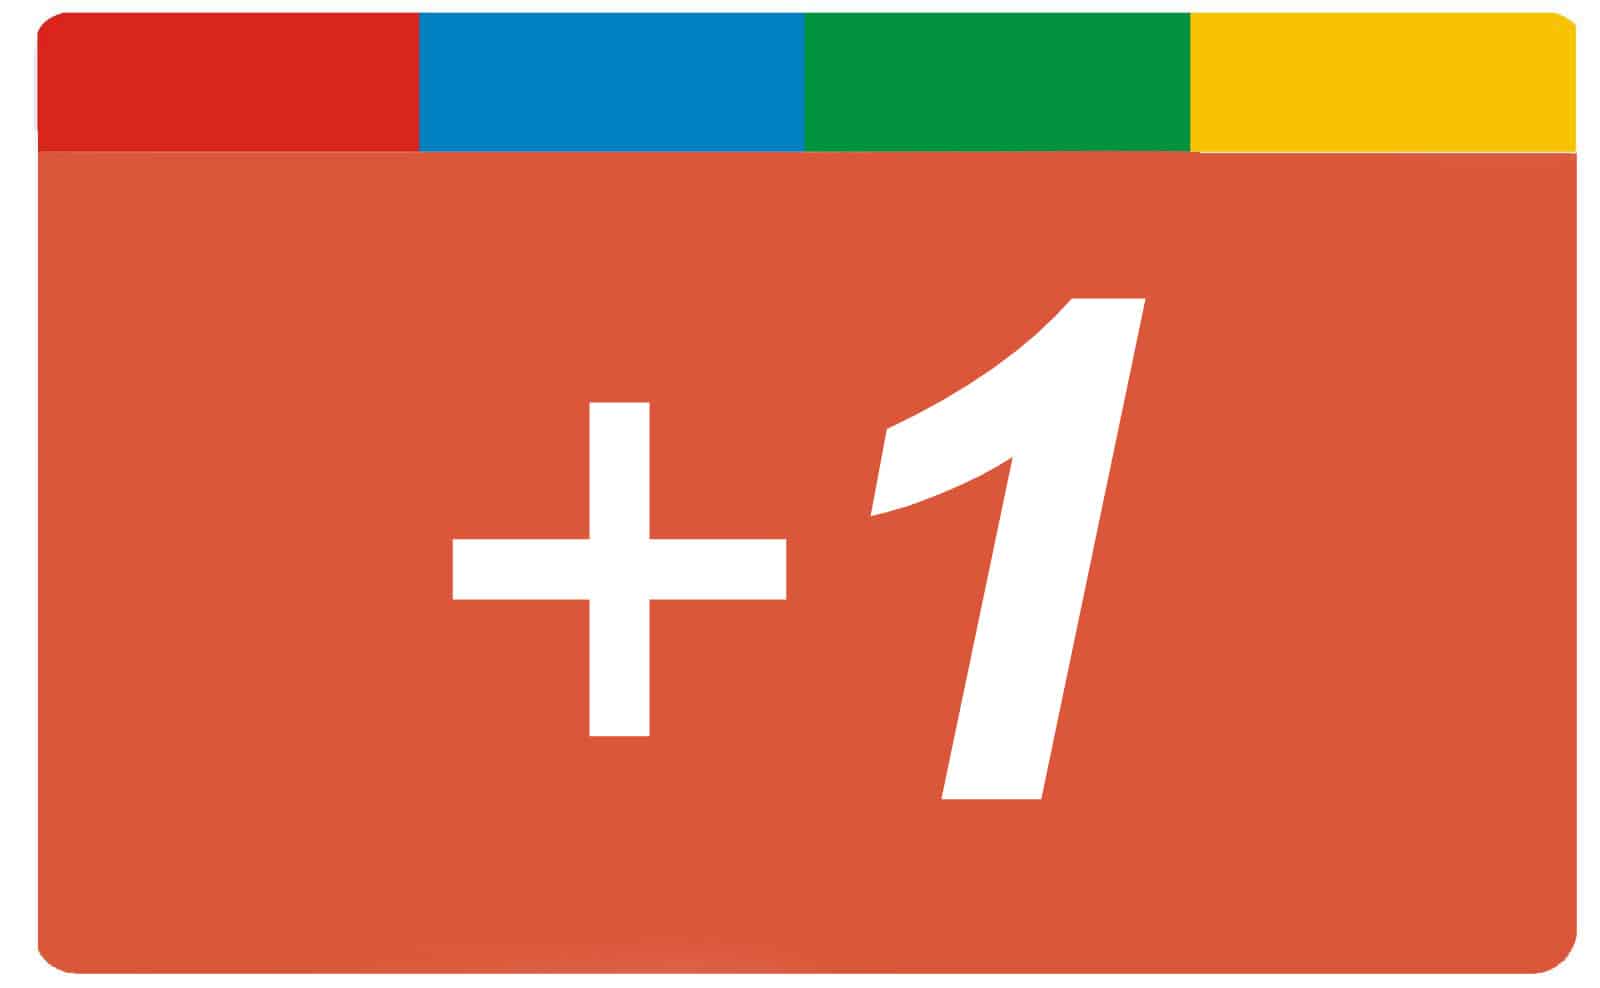 Matt Cutts: Google +1s Have No Affect on Rankings